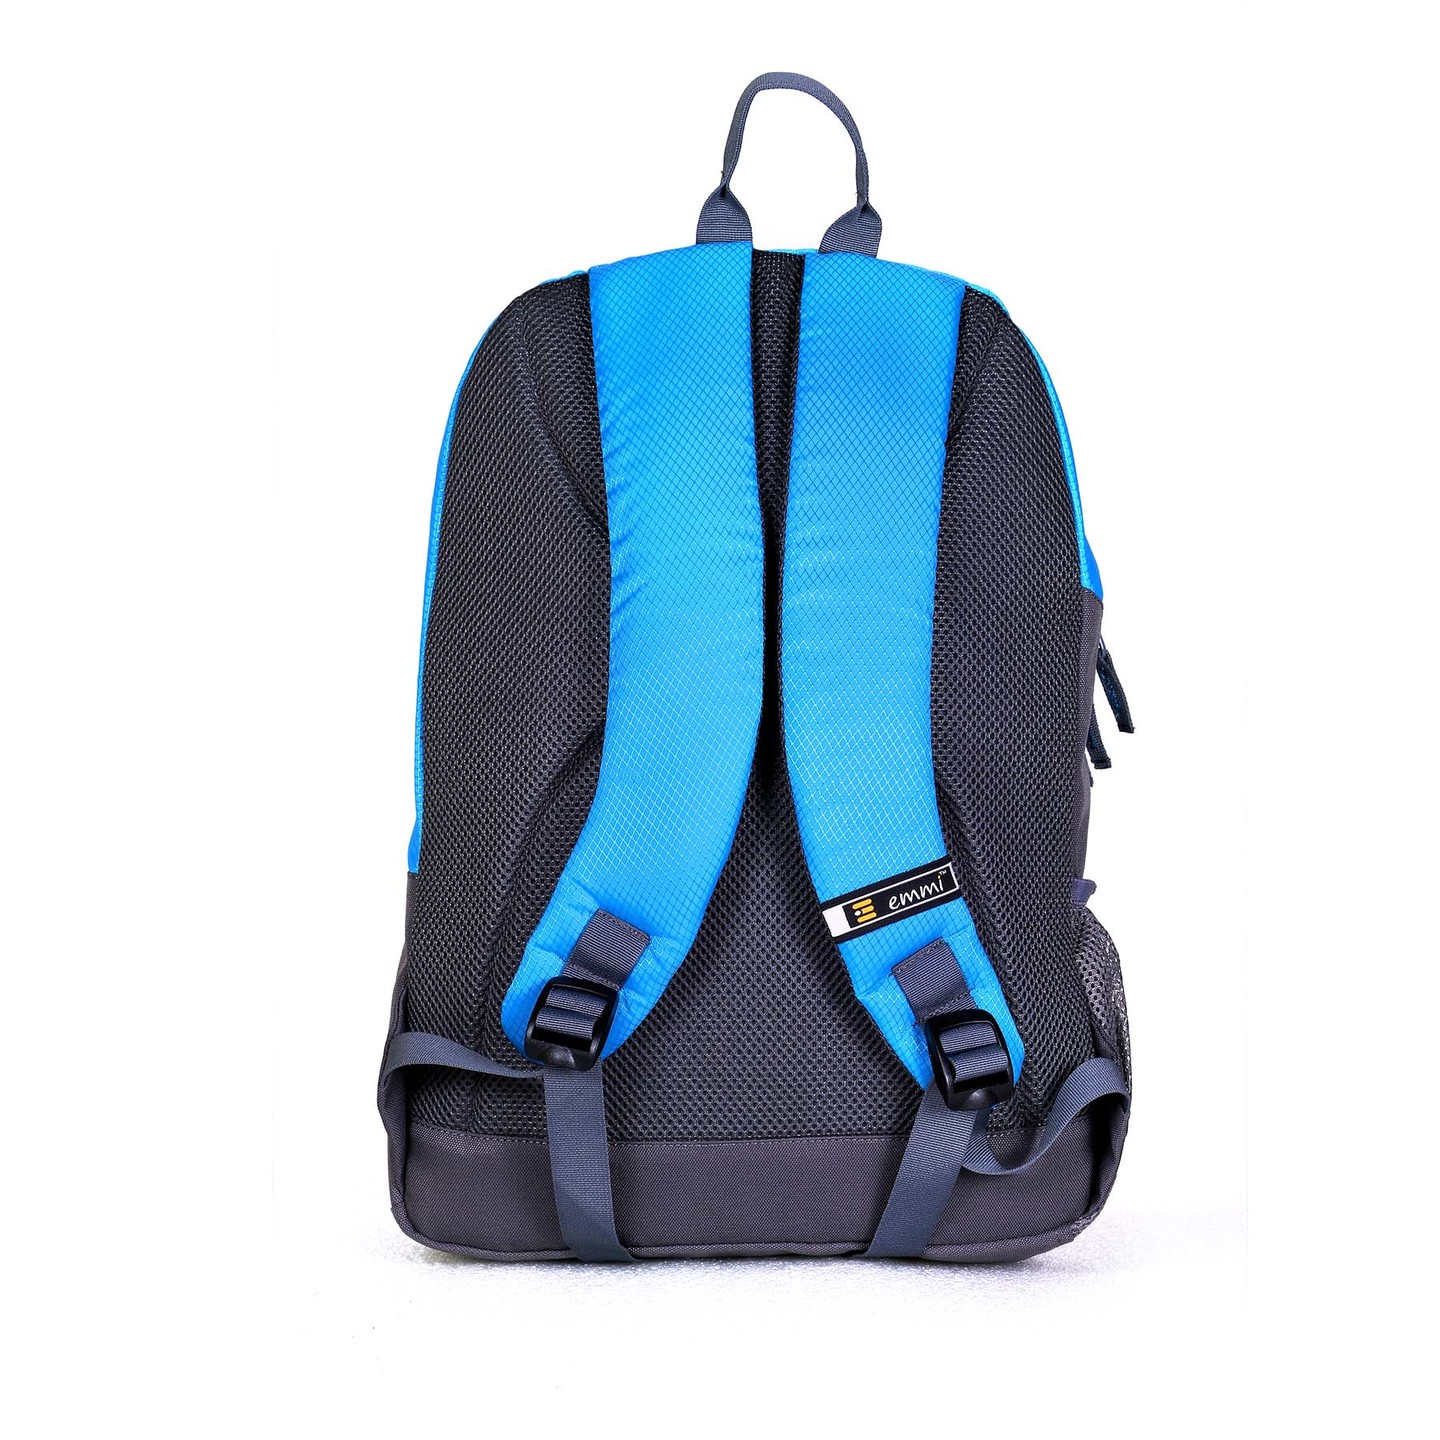 Buy EMMI BAGS Minto Orange Backpack Laptop/School Bag at Amazon.in